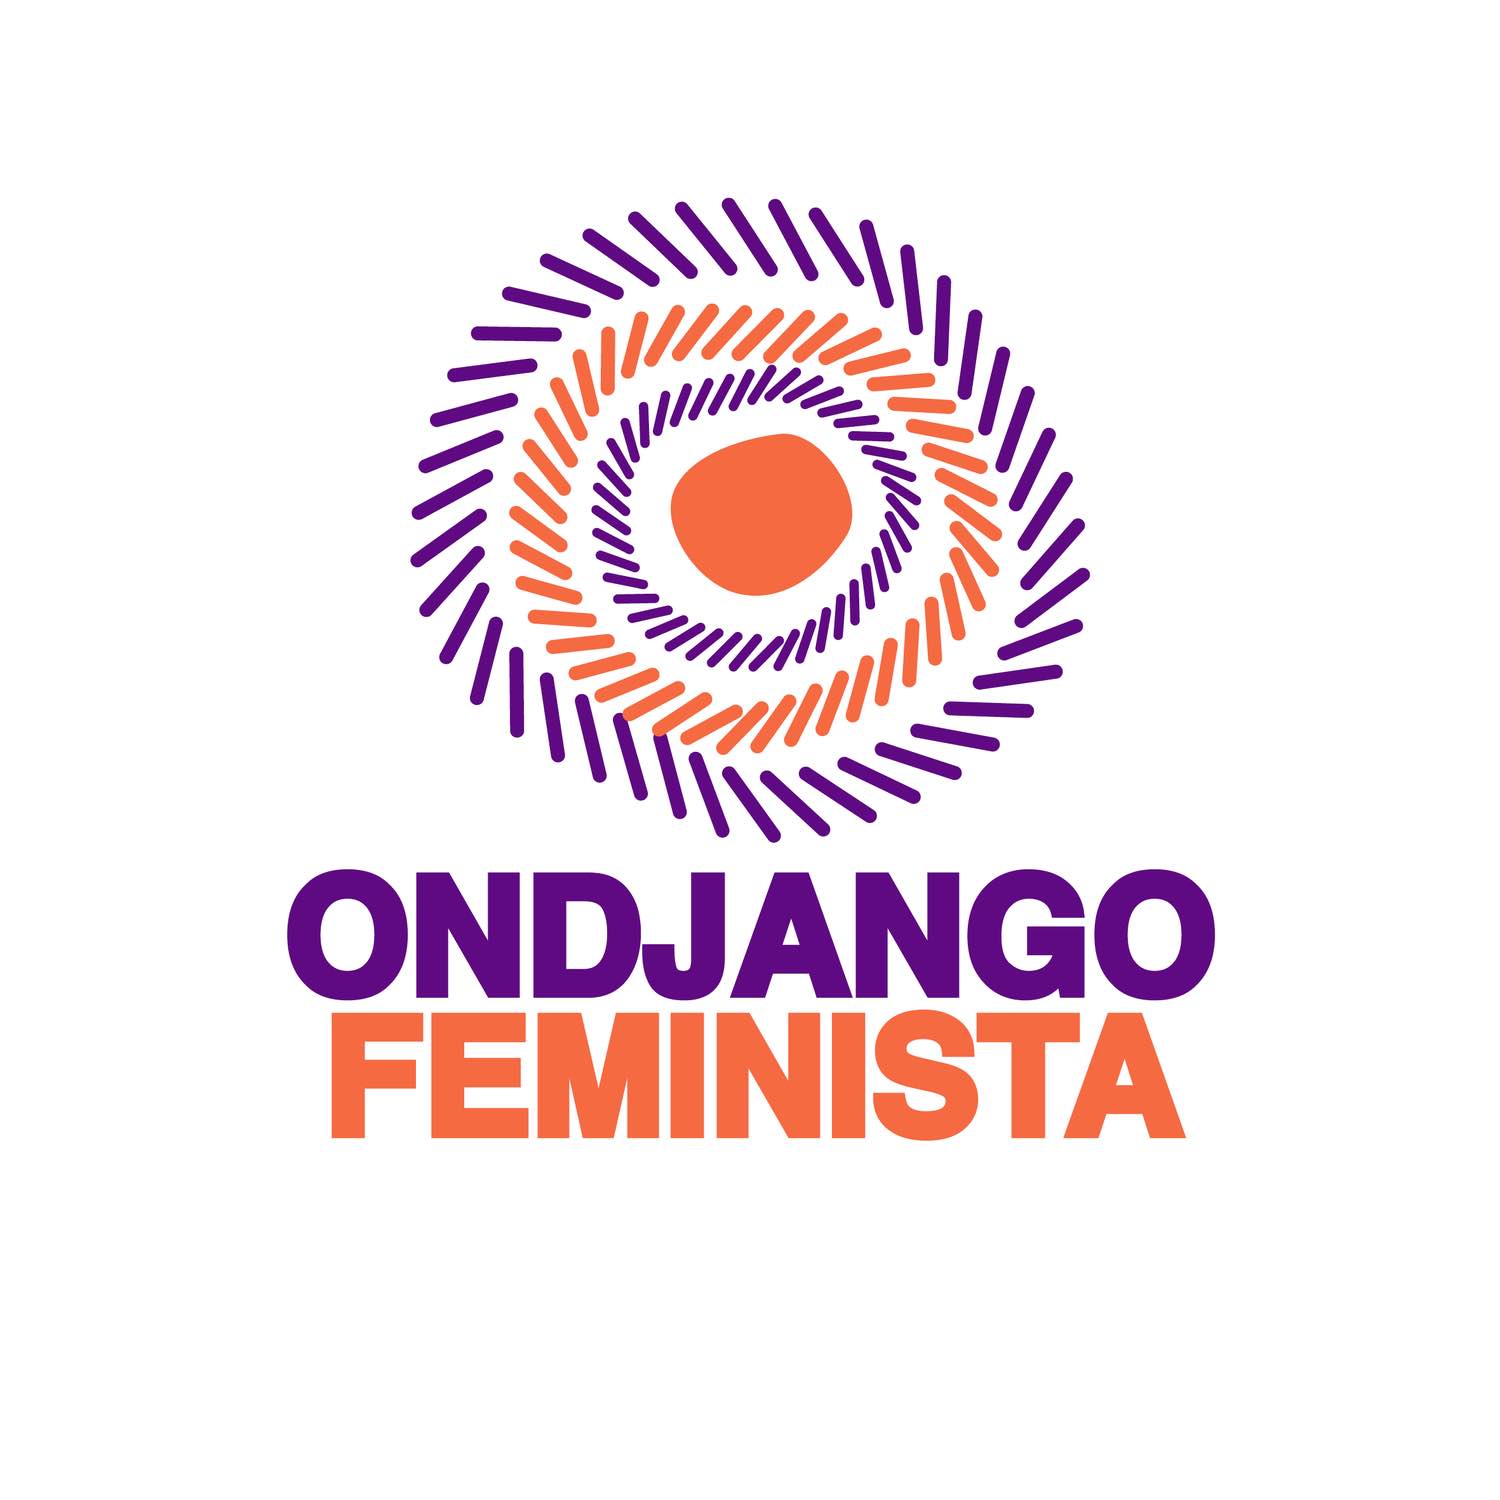 ondjango feminista angola